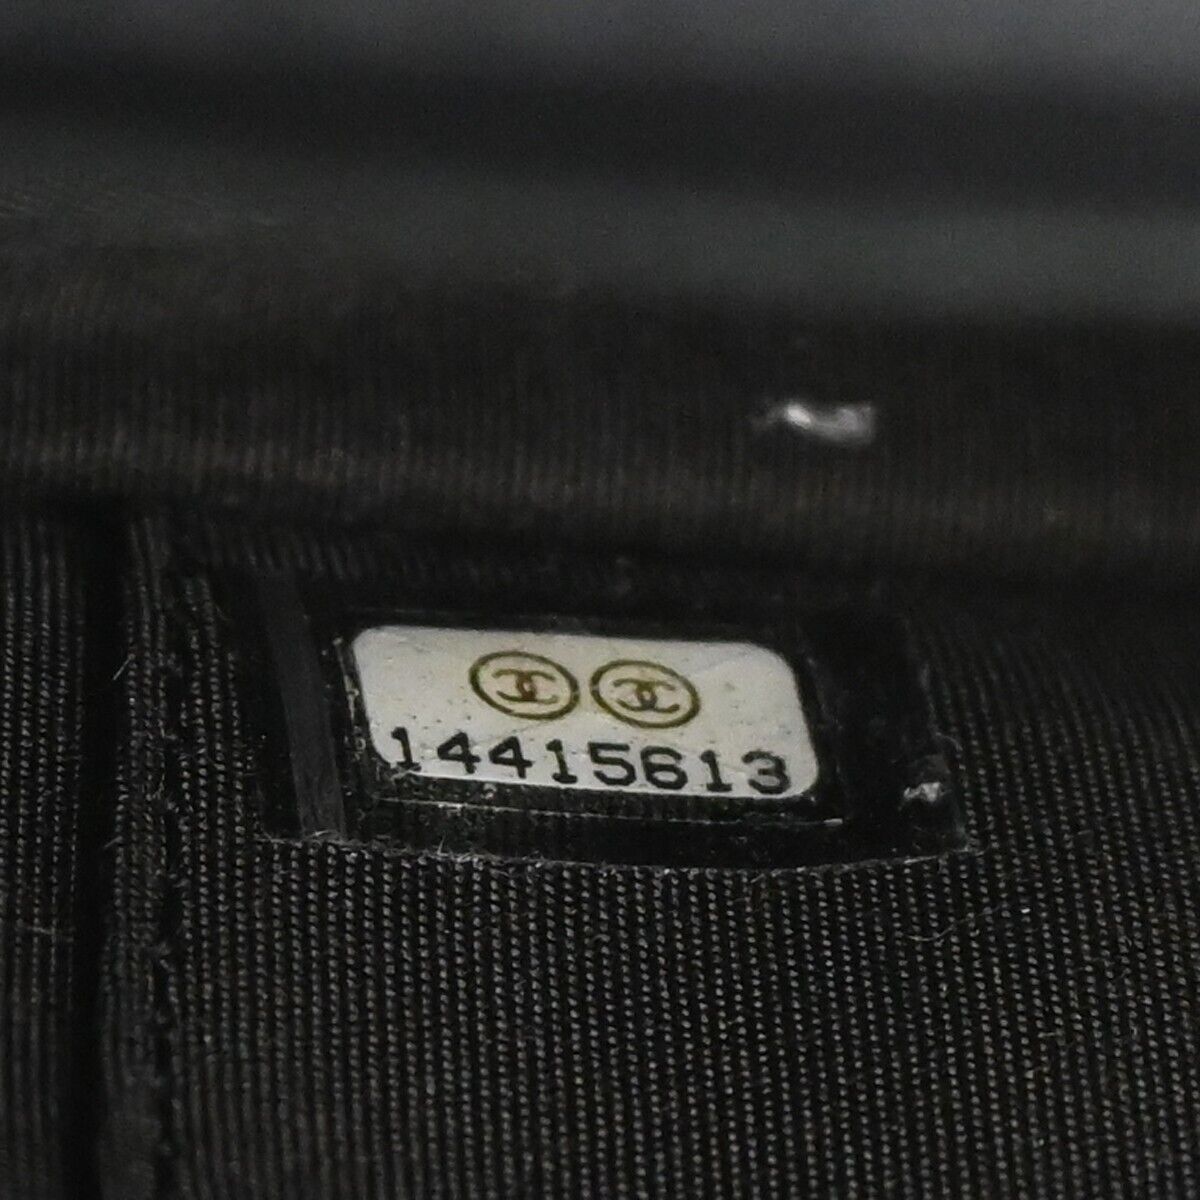 Pre-owned Chanel Cc Black Patent Leather Shoulder Bag ()